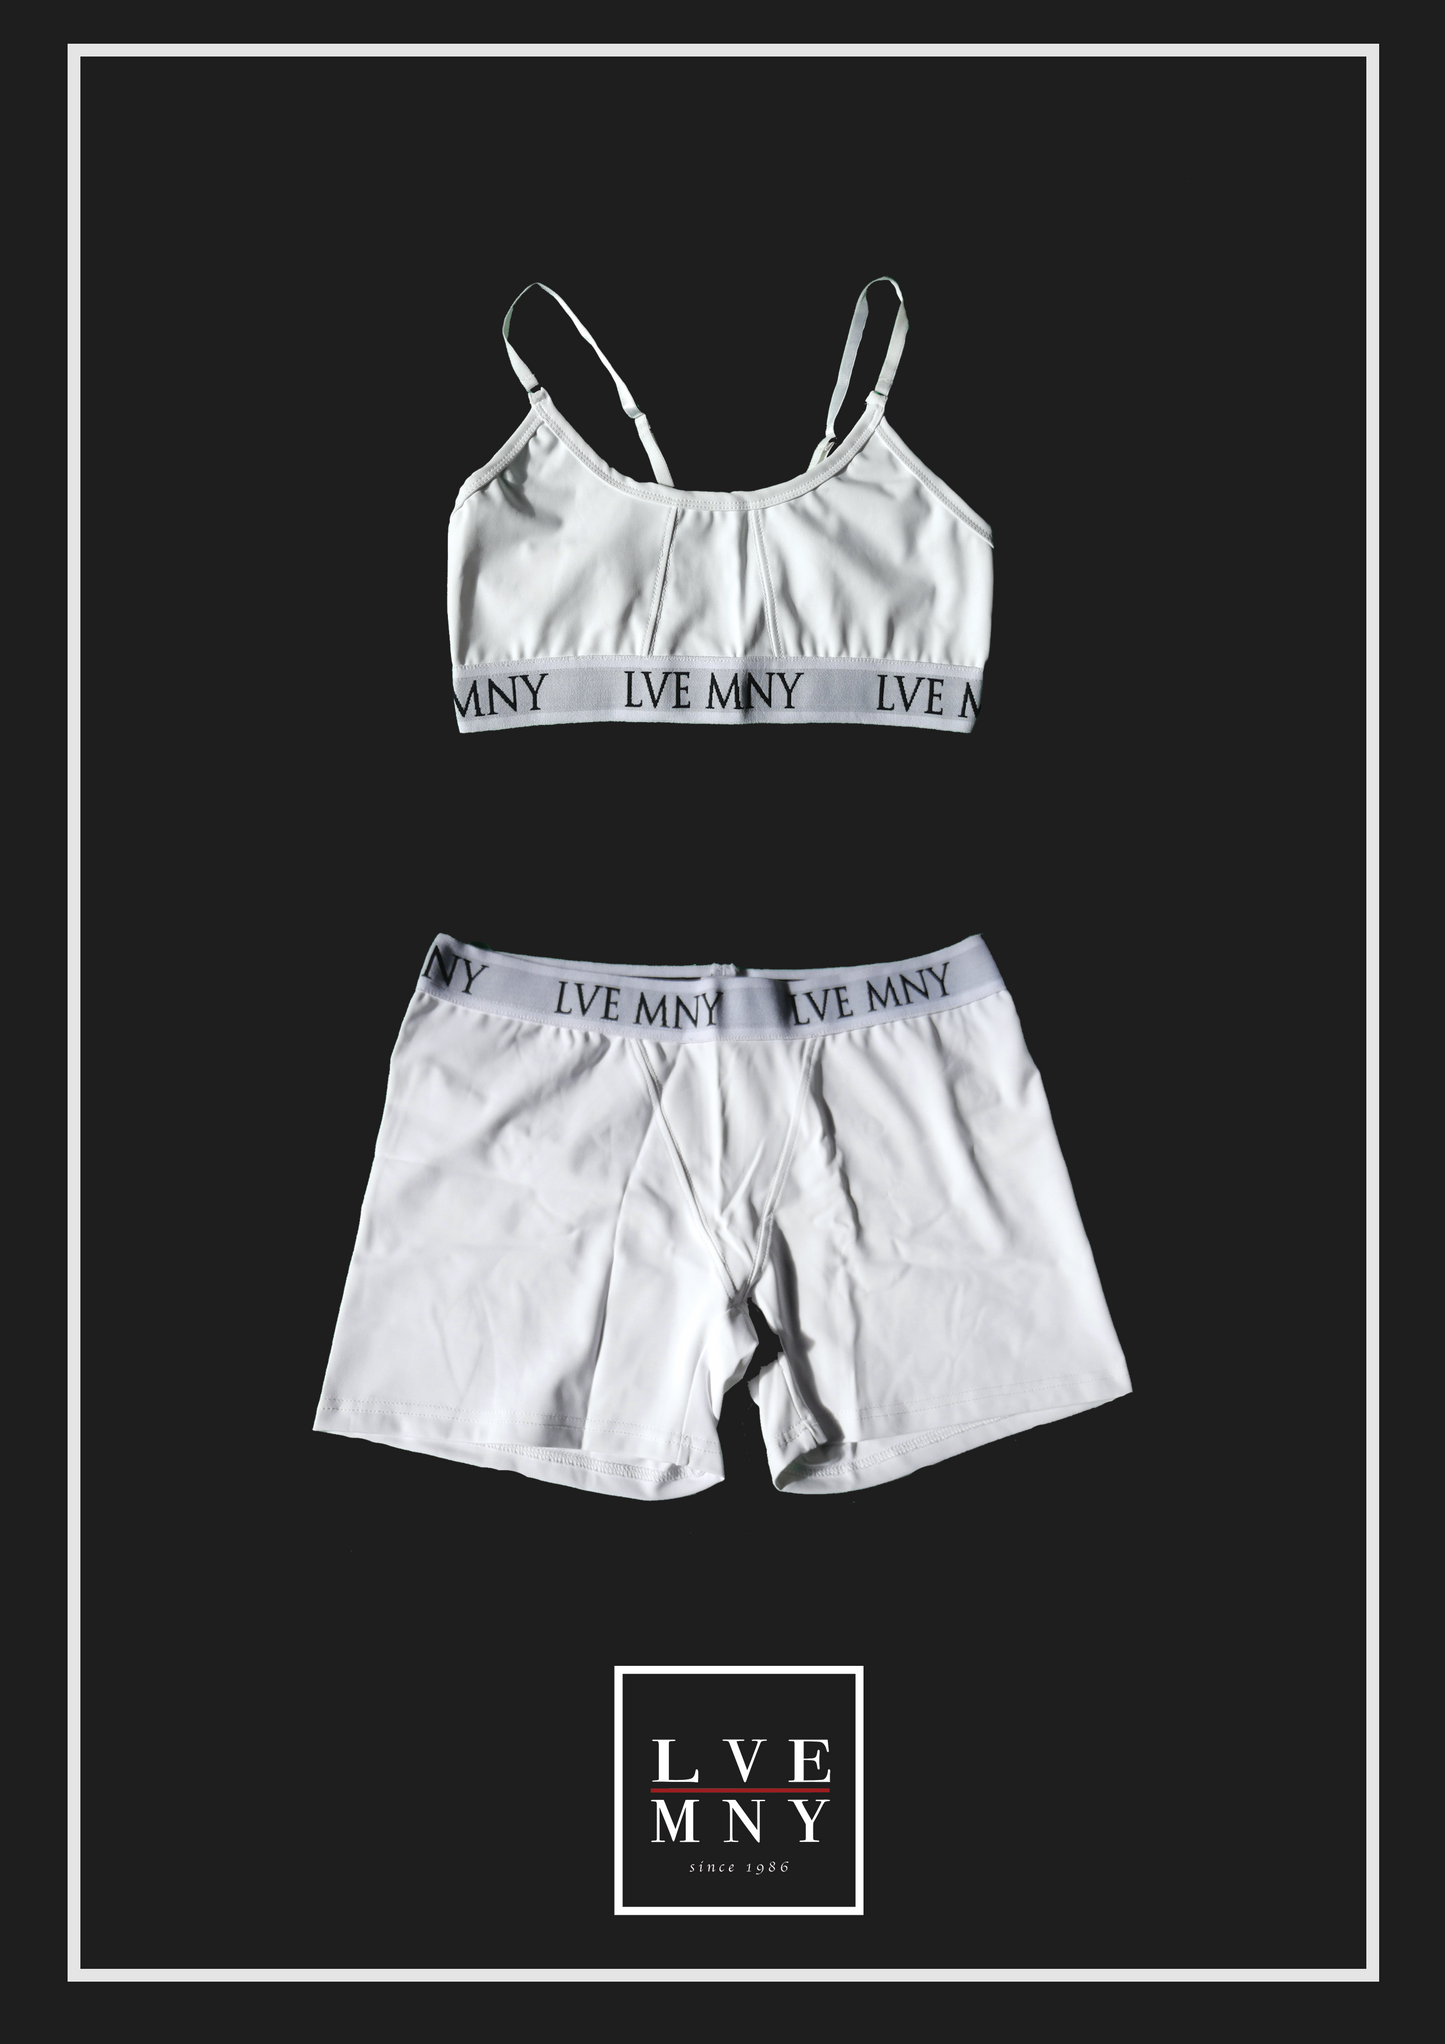 LVE MNY 2pc sports bra underwear set